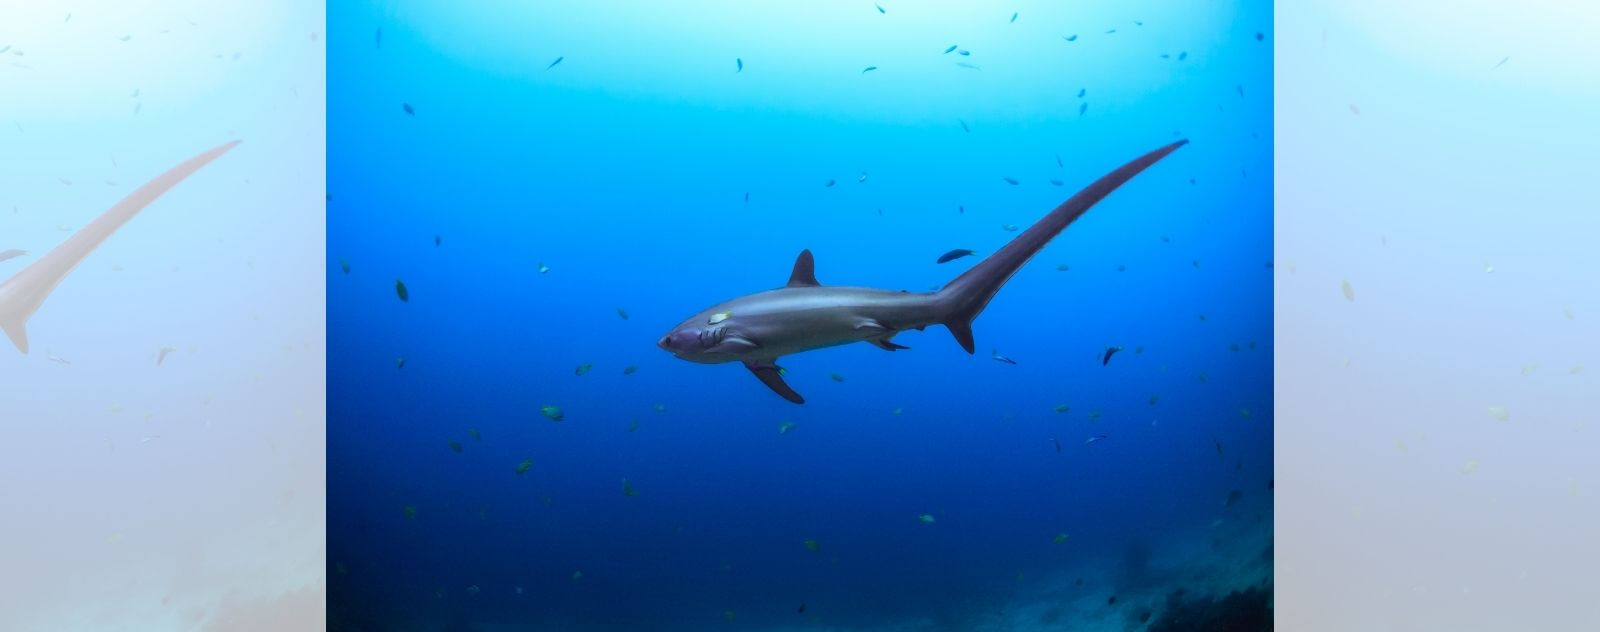 Tiburón zorro con aleta de cola larga